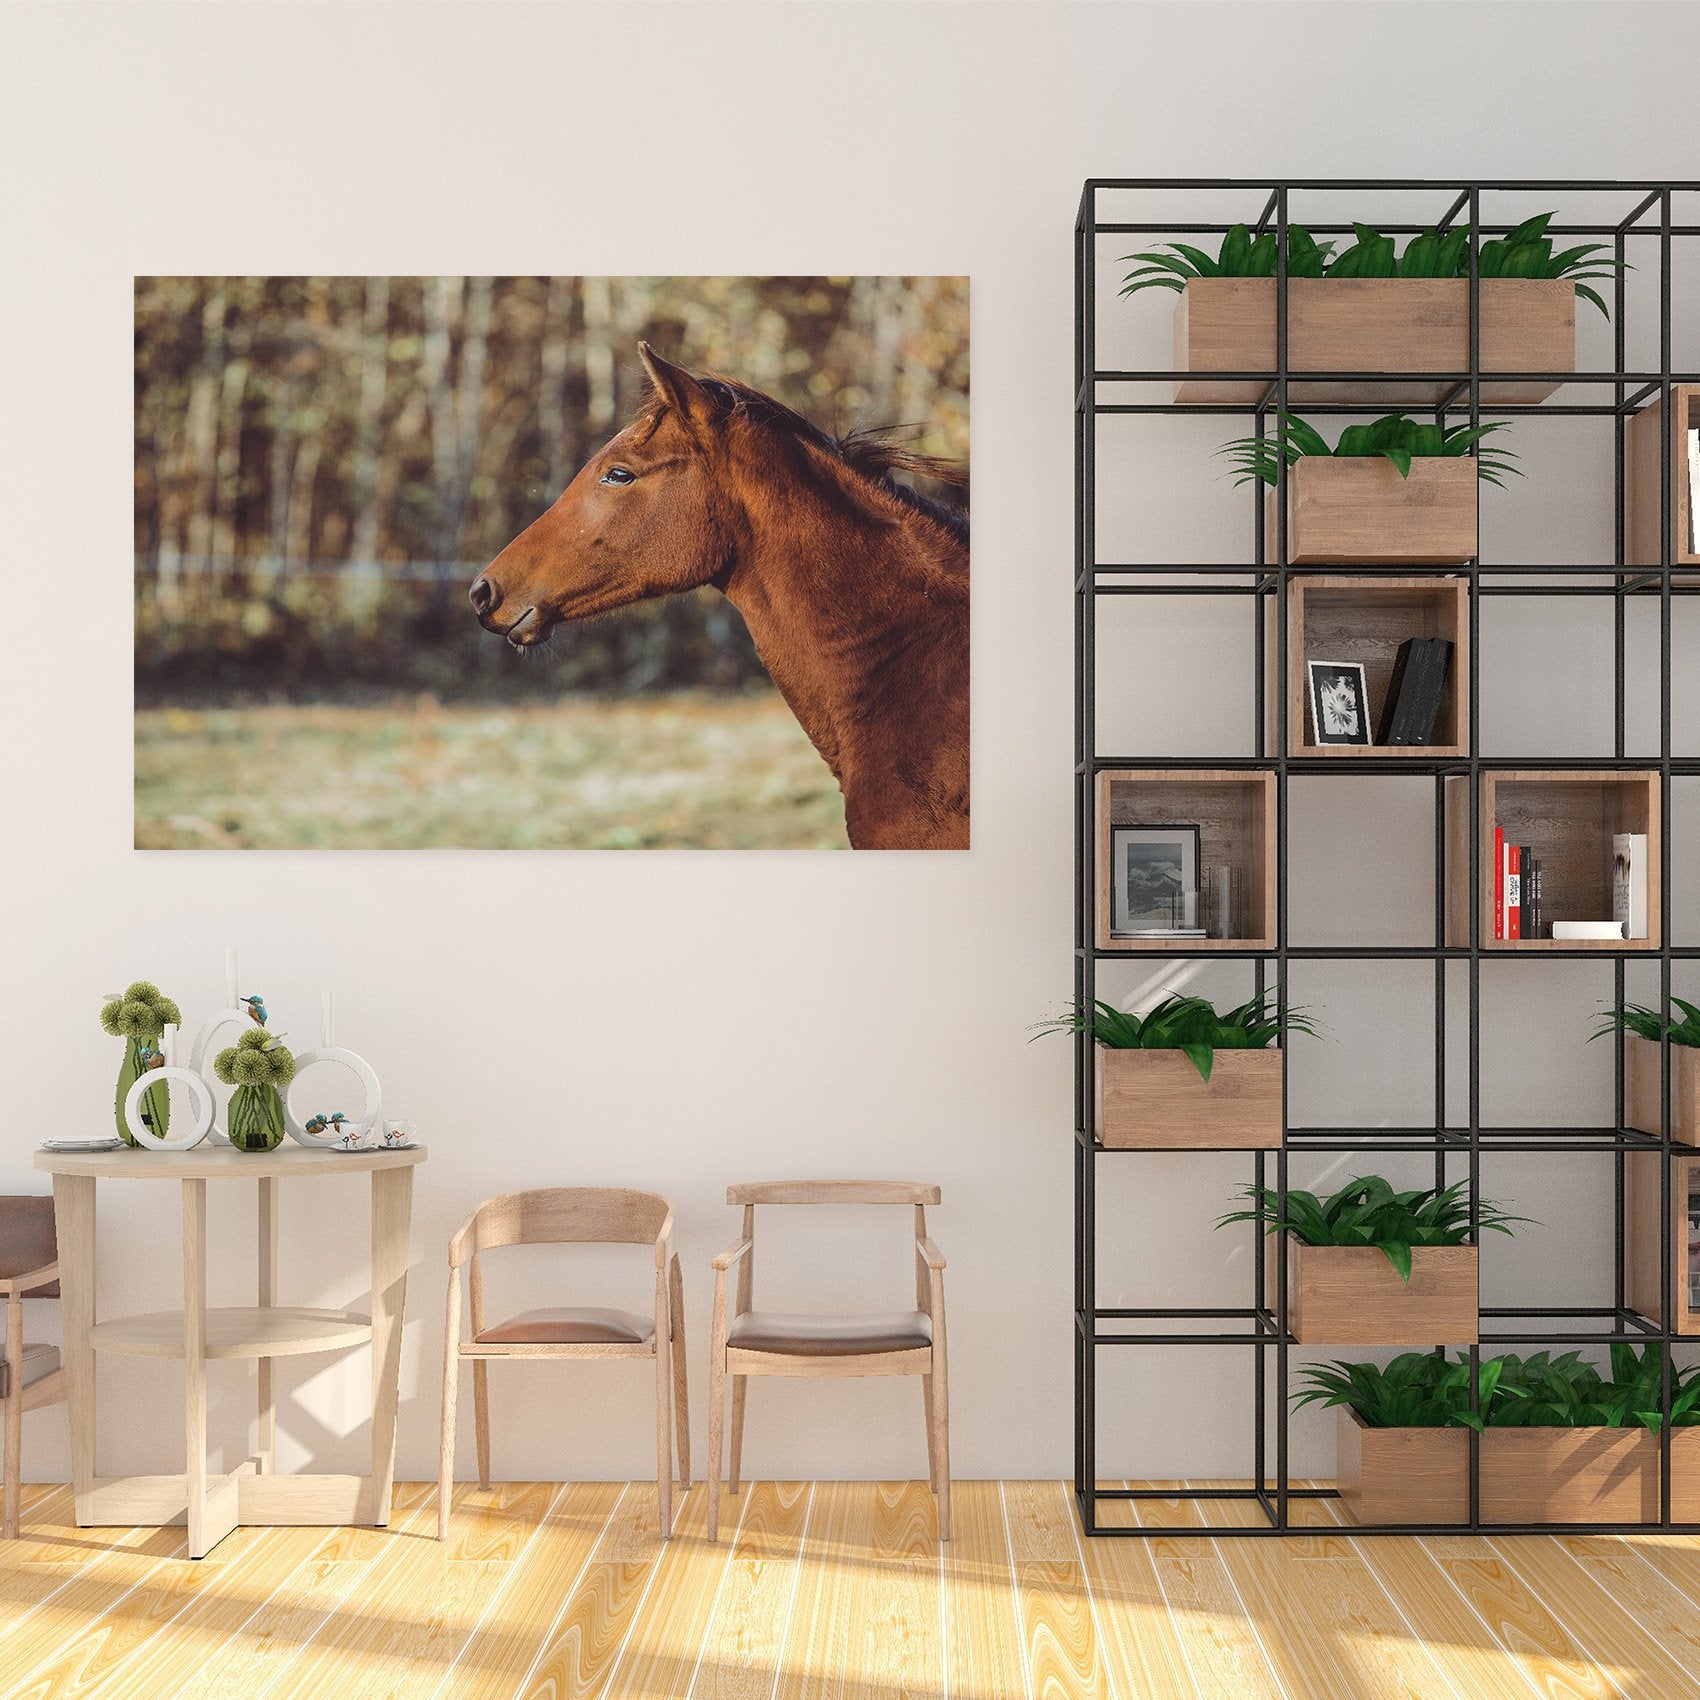 3D Forest Horse 06 Animal Wall Stickers Wallpaper AJ Wallpaper 2 